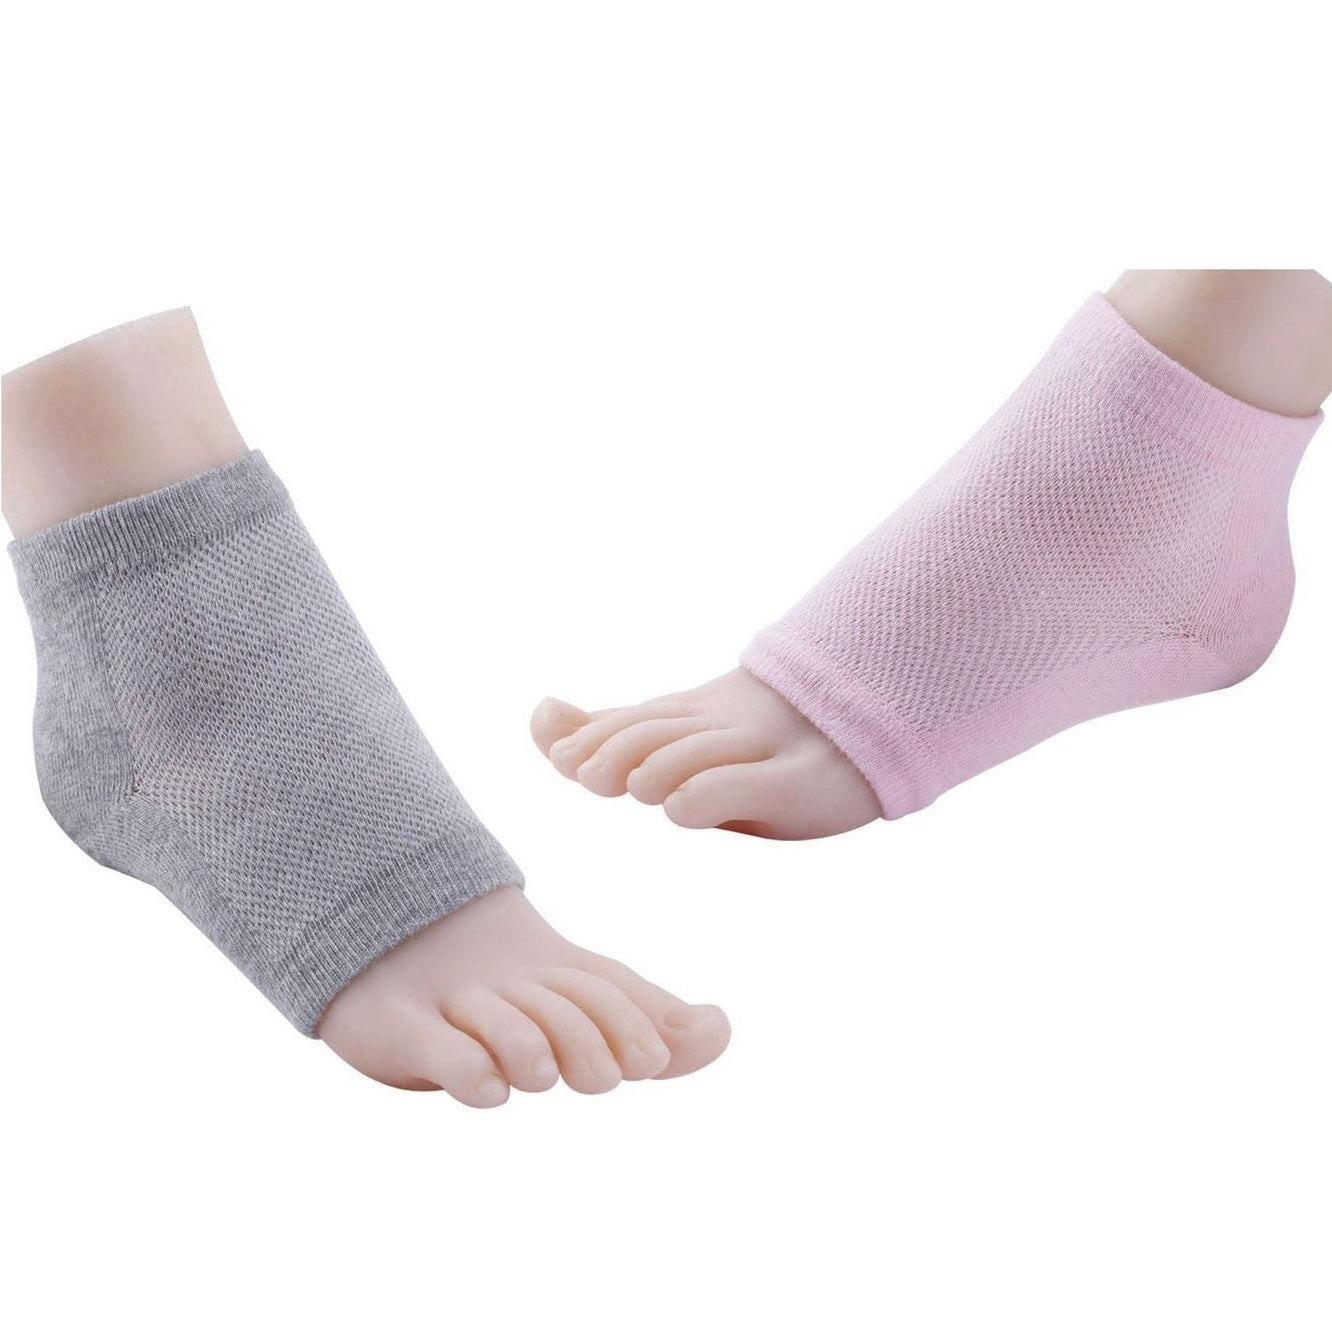 Moisturizing Socks Lotion Gel for Dry Cracked Heels 4 Pack, Spa